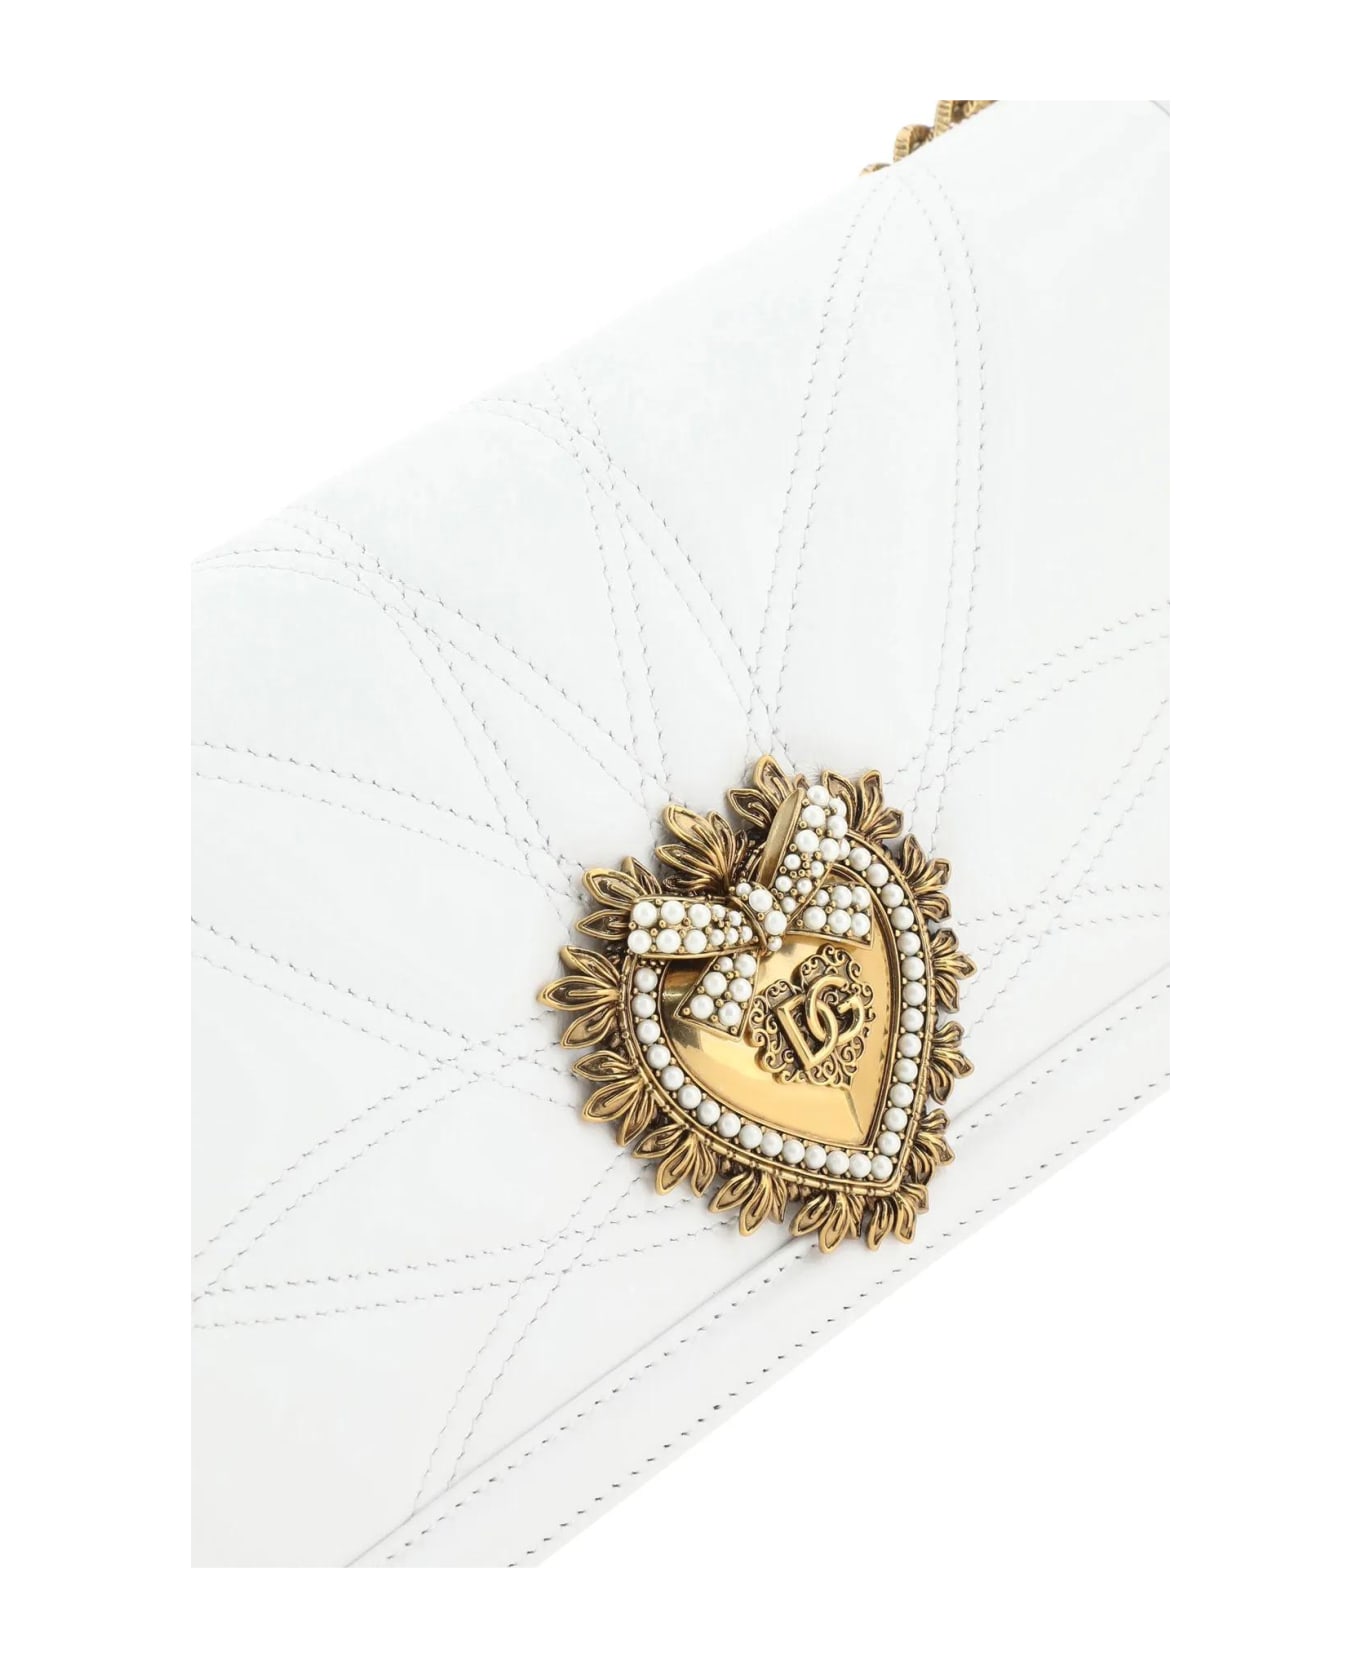 Dolce & Gabbana White Nappa Leather Devotion Shoulder Bag - Bianco